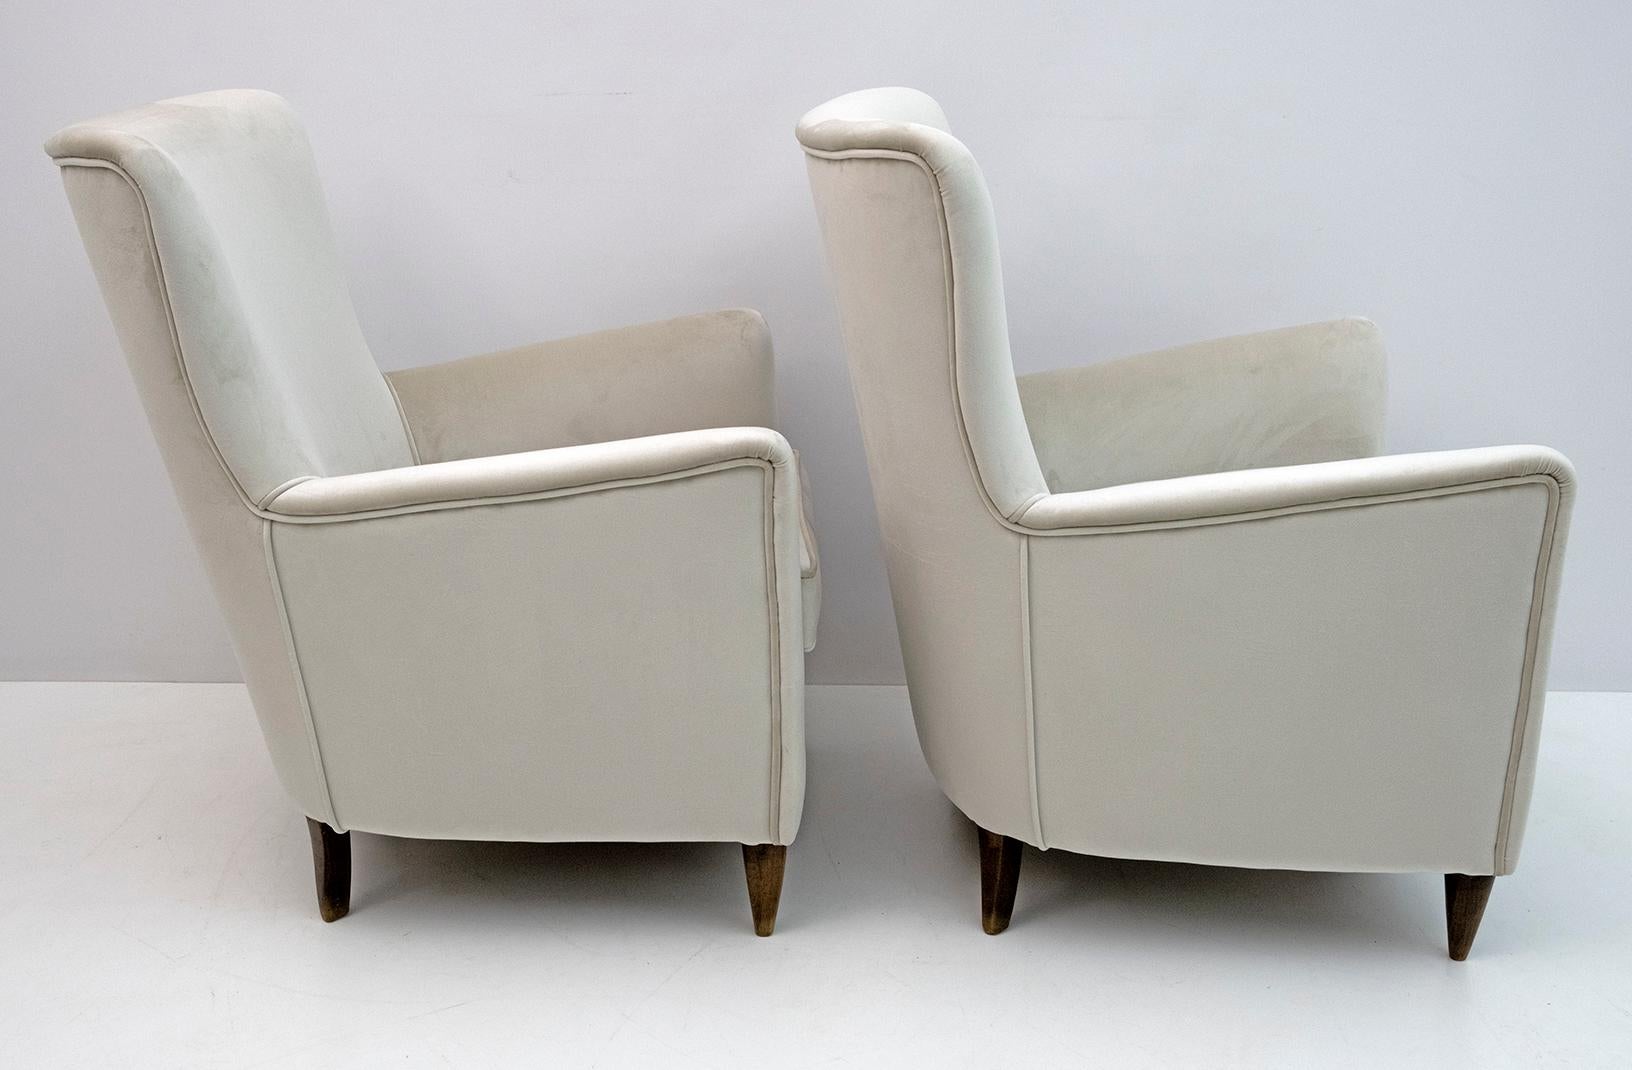 Pair of Gio Ponti Style Mid-Century Modern Italian Velvet Armchairs for Isa, 50s For Sale 2